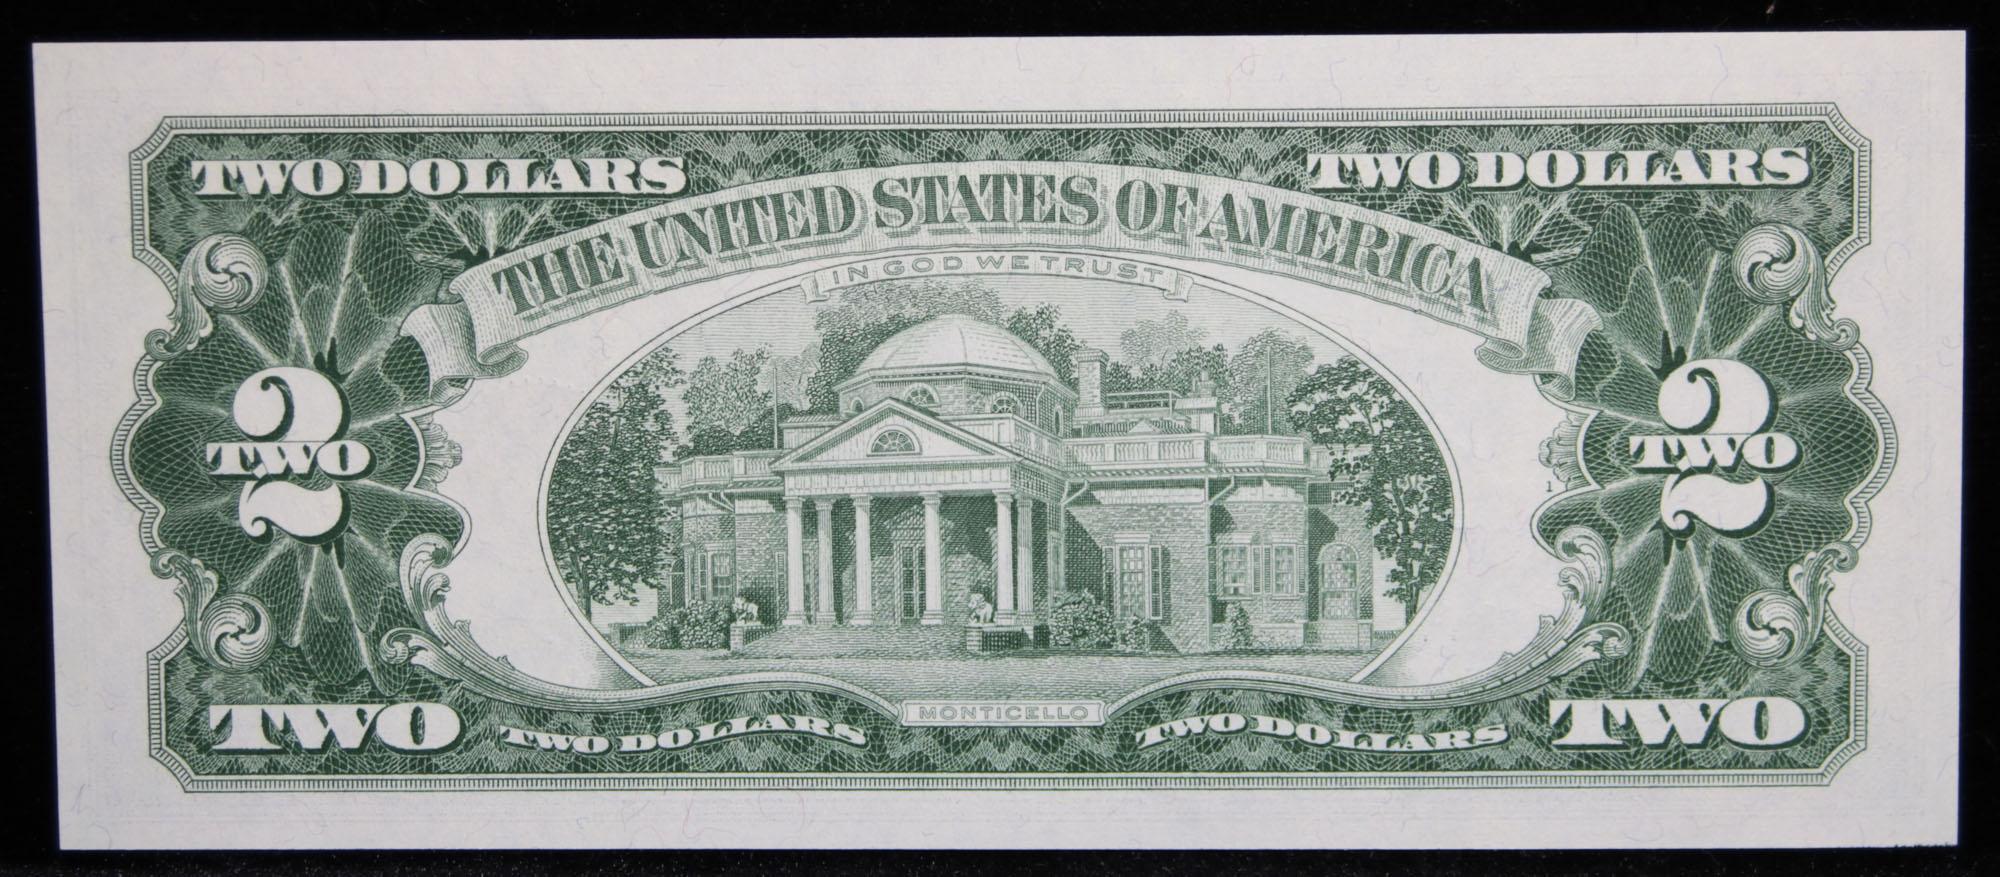 1963 $2 Red Seal United States Note Grades Gem++ CU